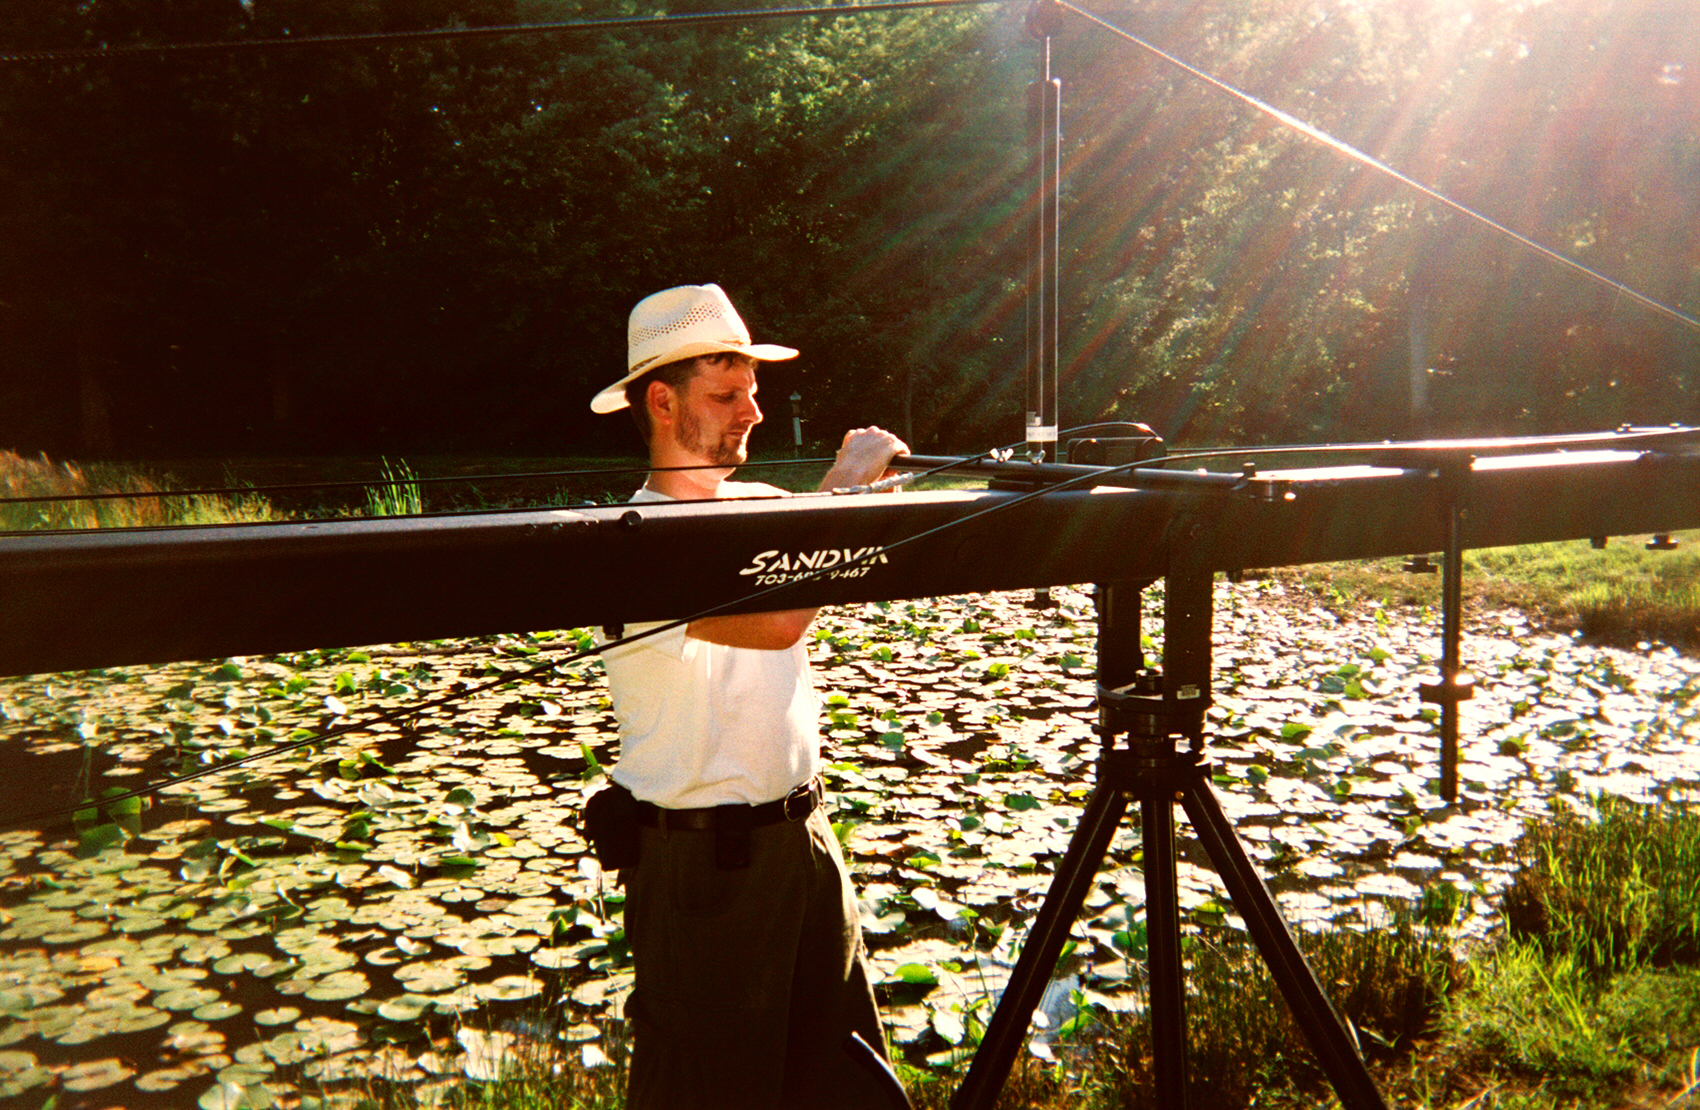 National Wildlife Federation shoot. Setting up my 30 Foot Jimmy Jib crane by a pond near Manassas, VA.